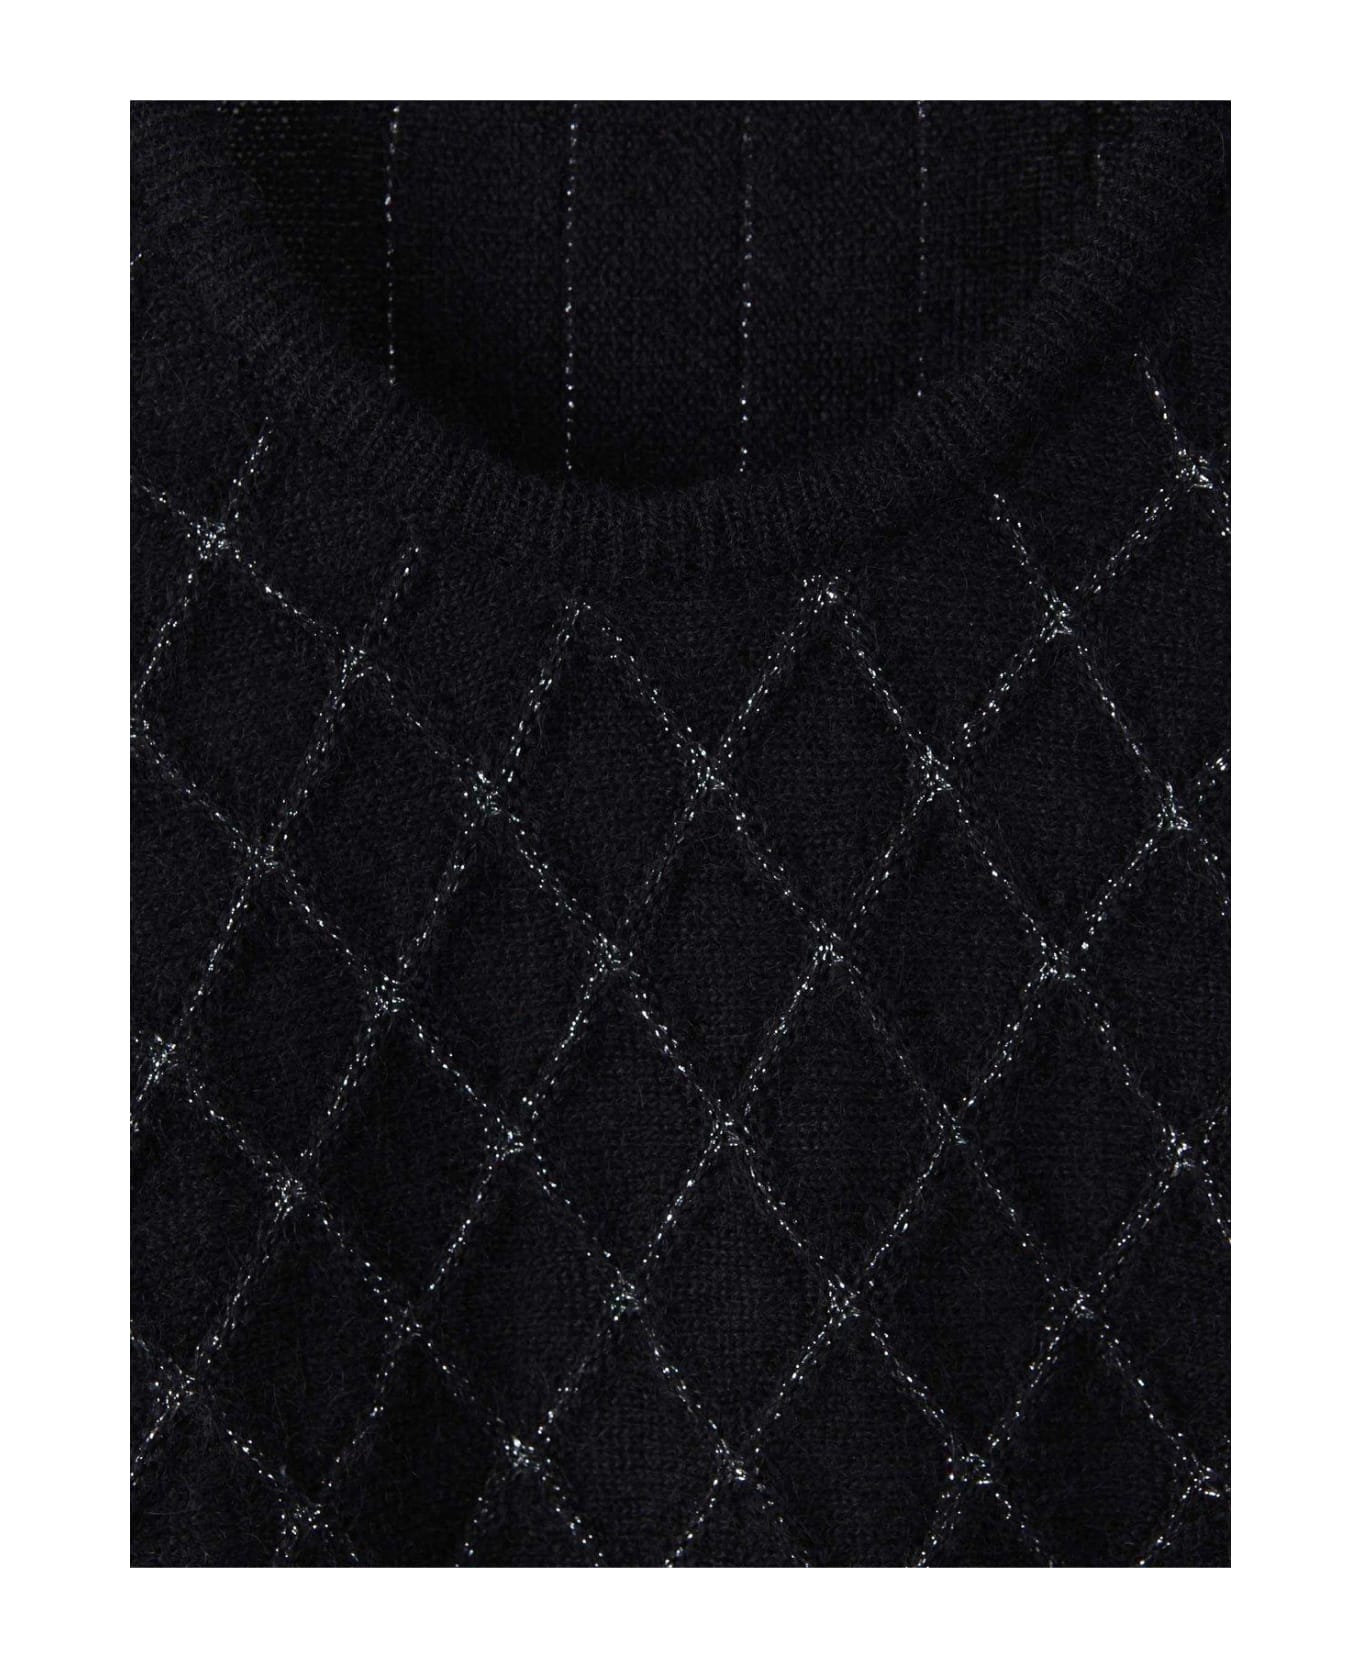 Saint Laurent Crewneck Long-sleeved Sweater - BLACK ニットウェア